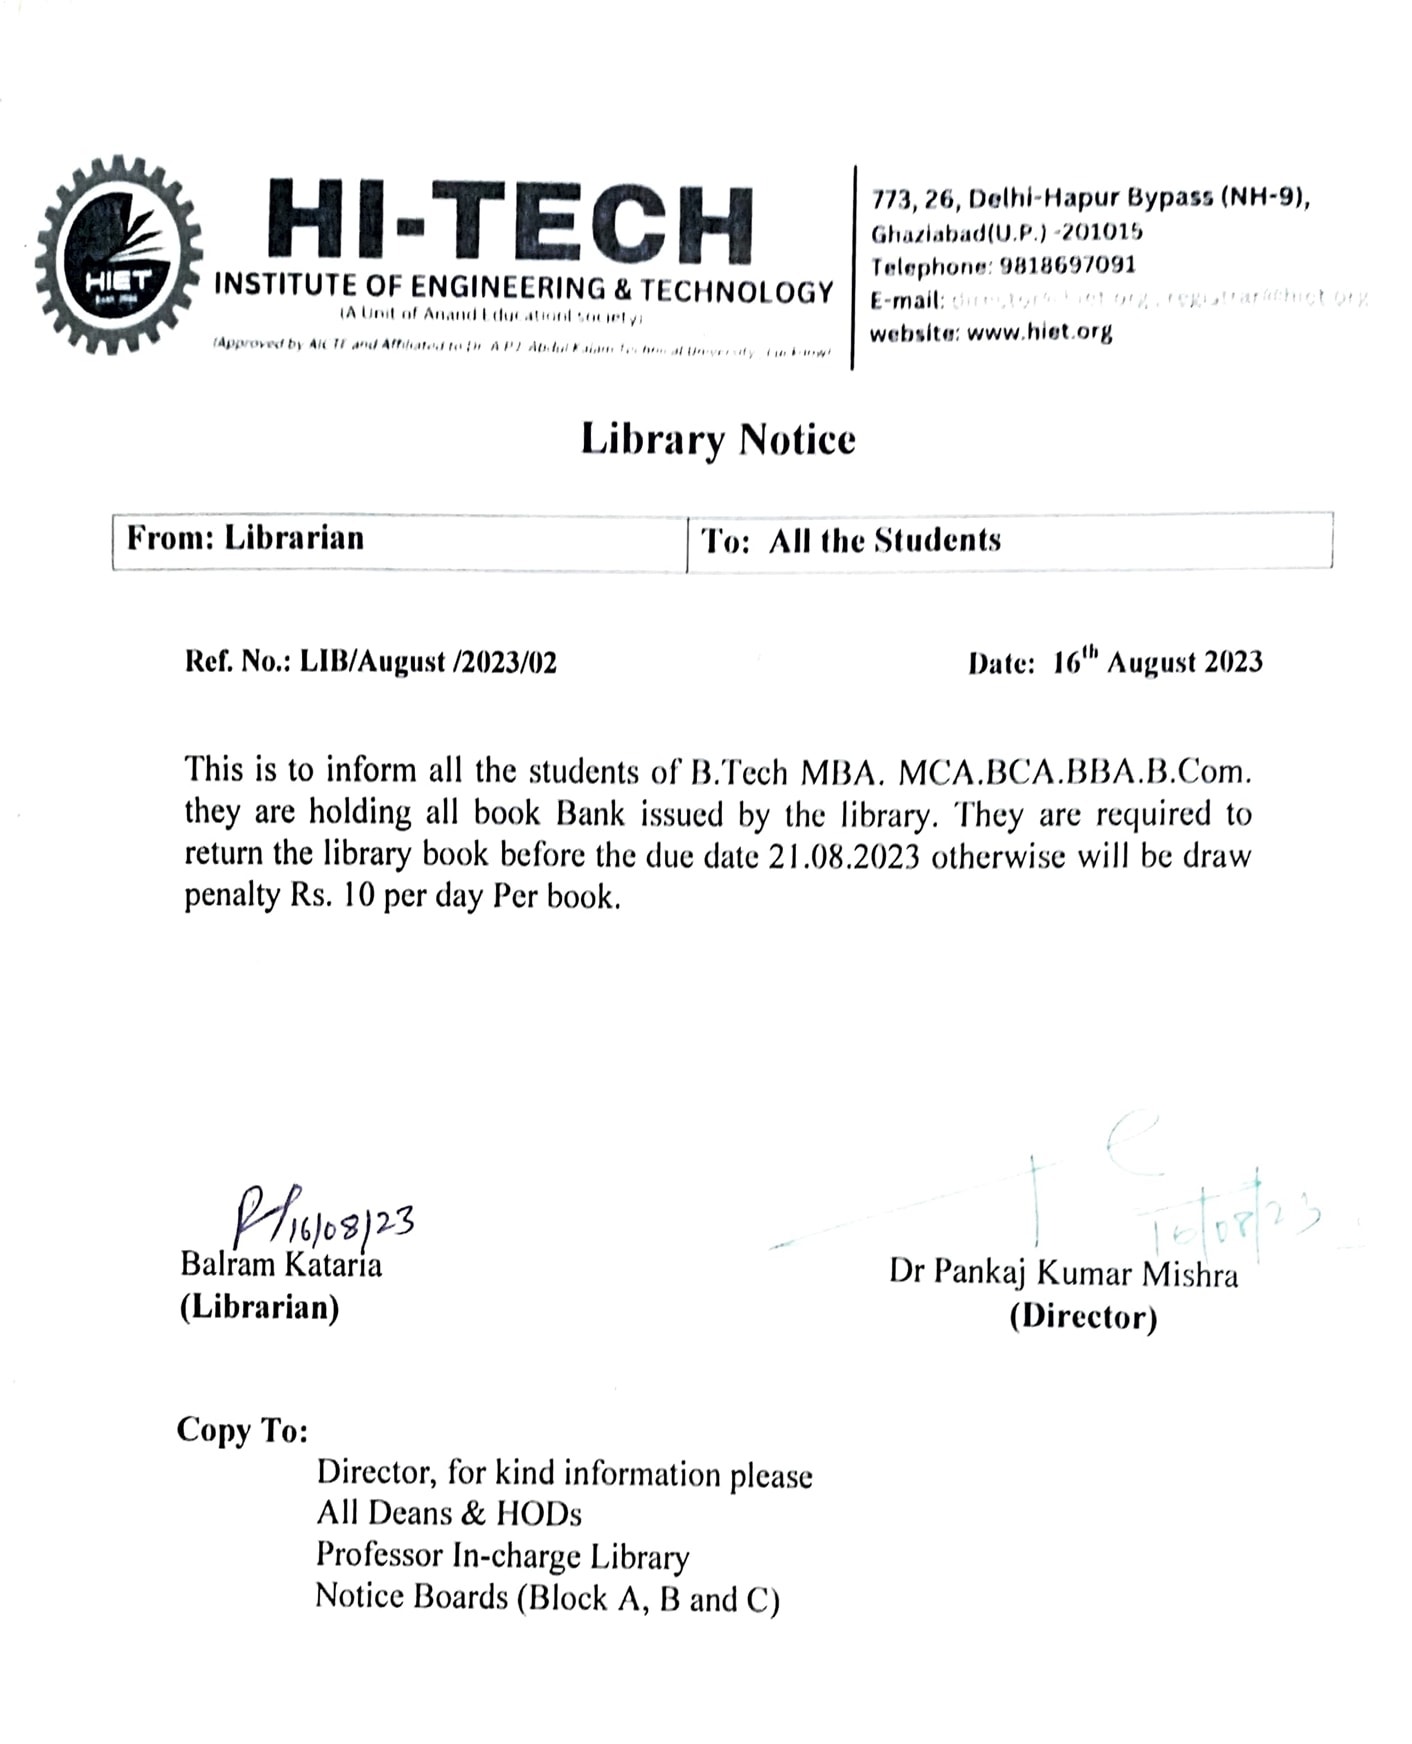 hiet-library-notice-2023-08-23